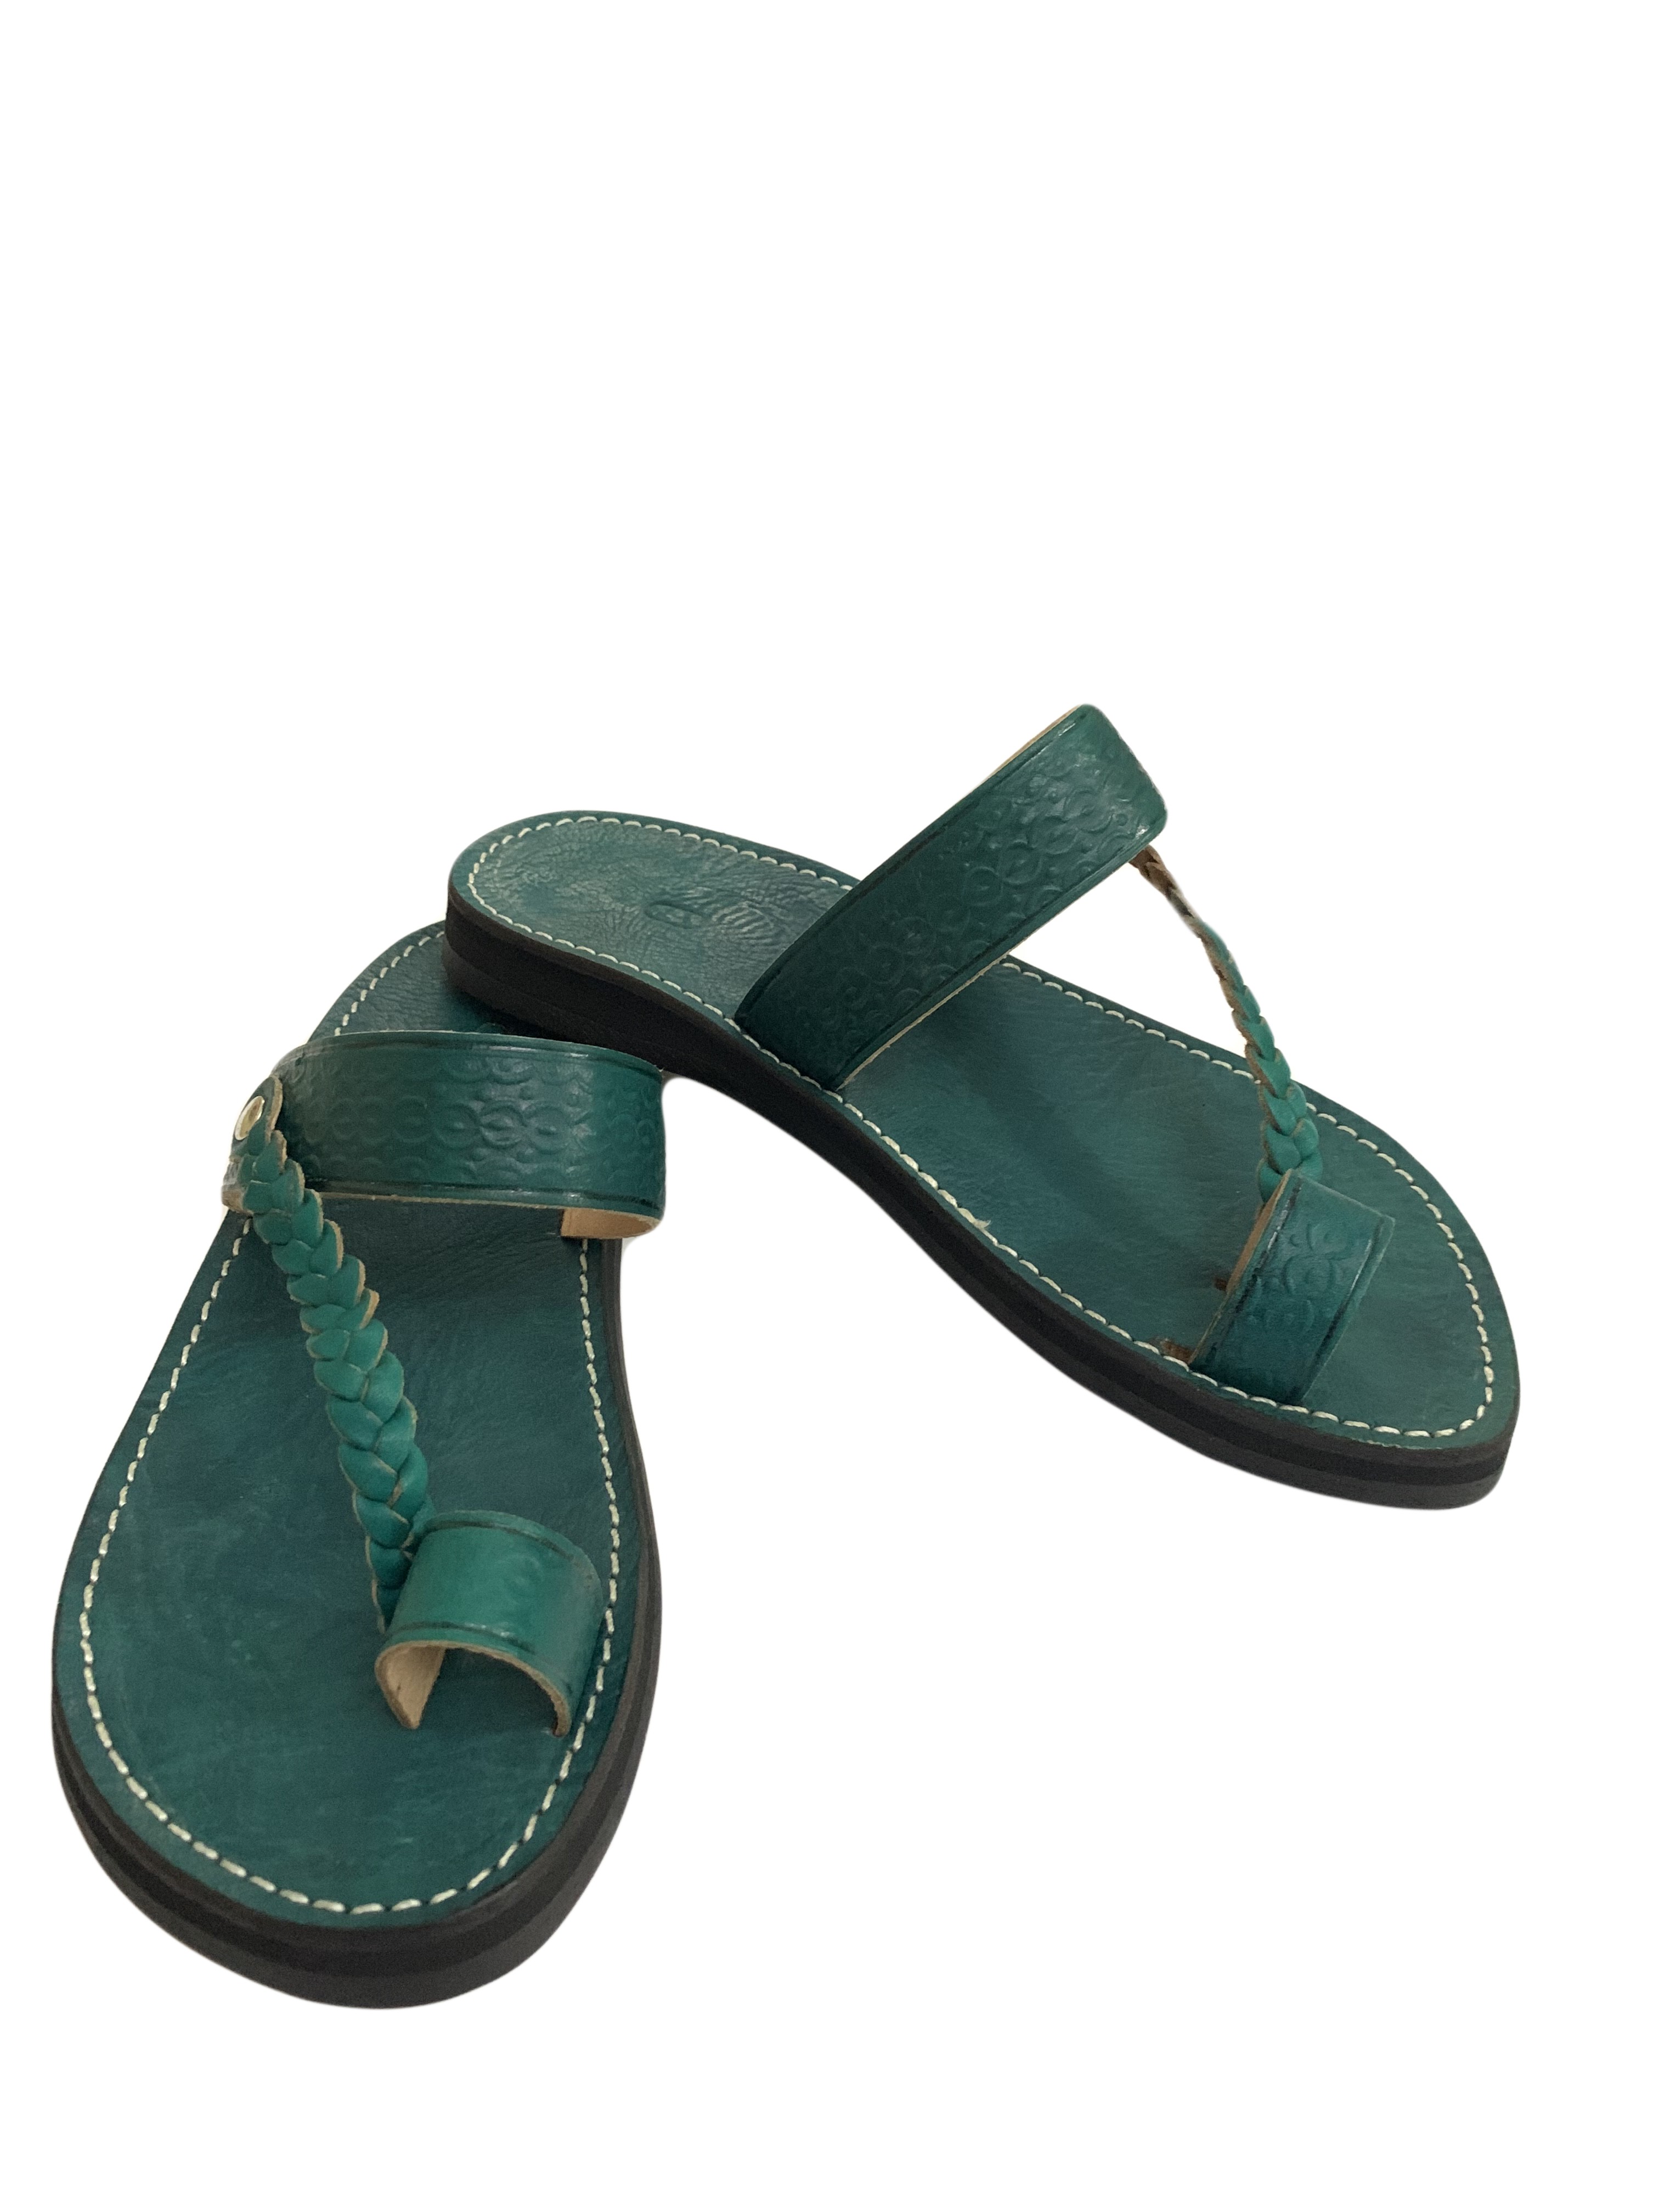 Leather sandal for women